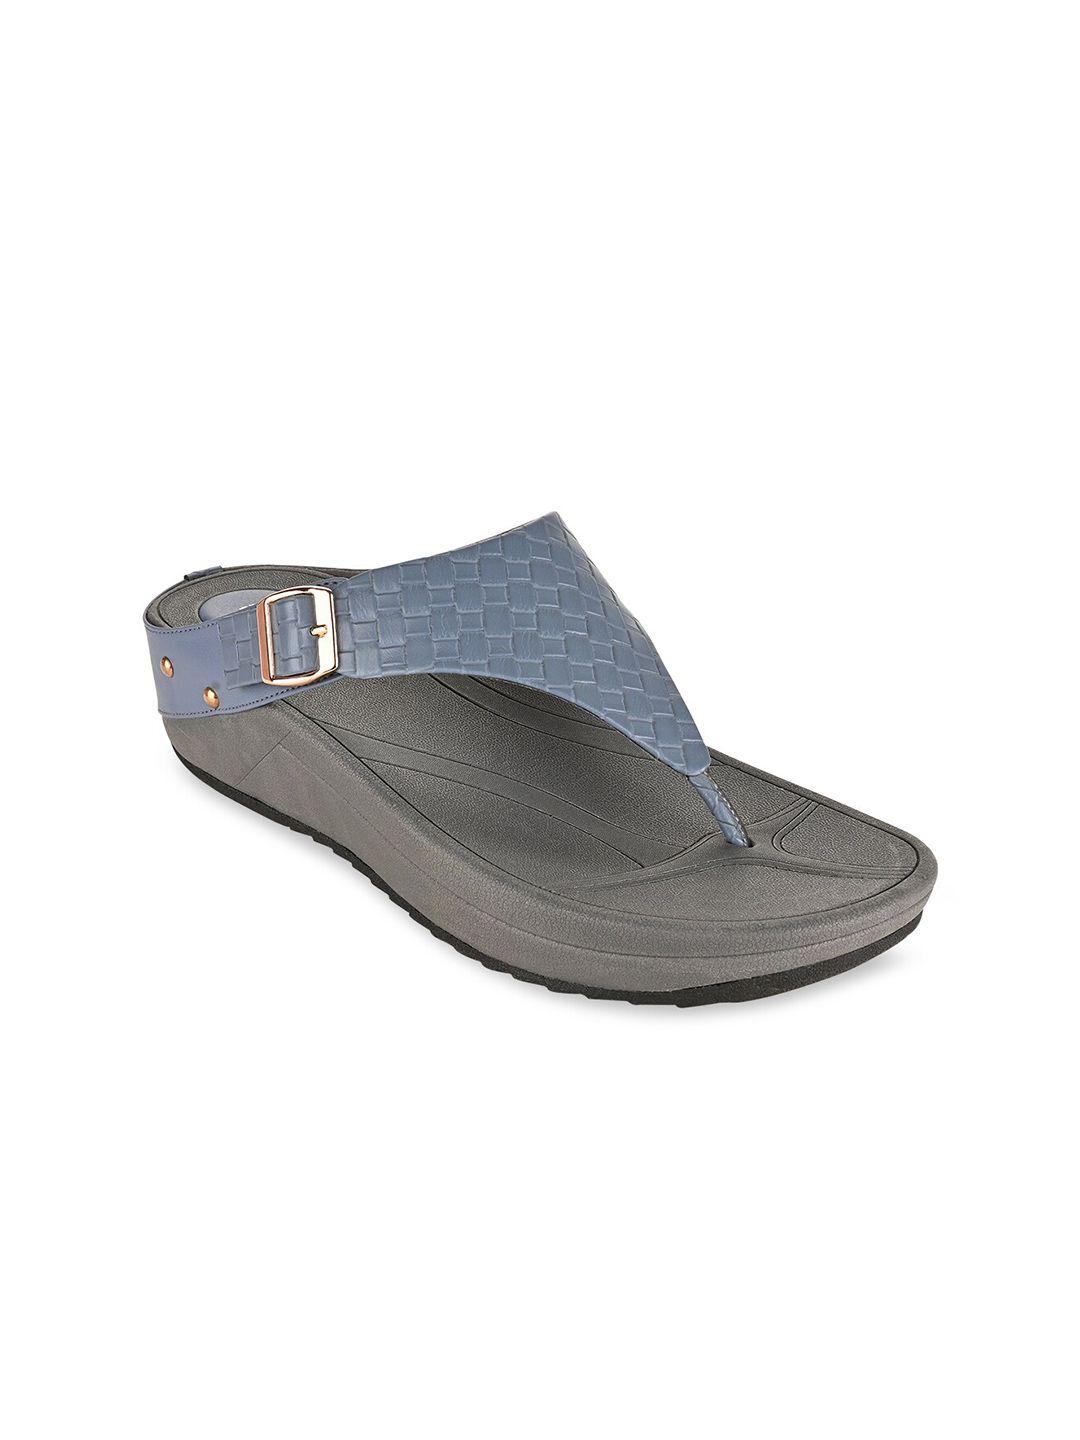 rocia-women-blue-textured-synthetic-comfort-sandals